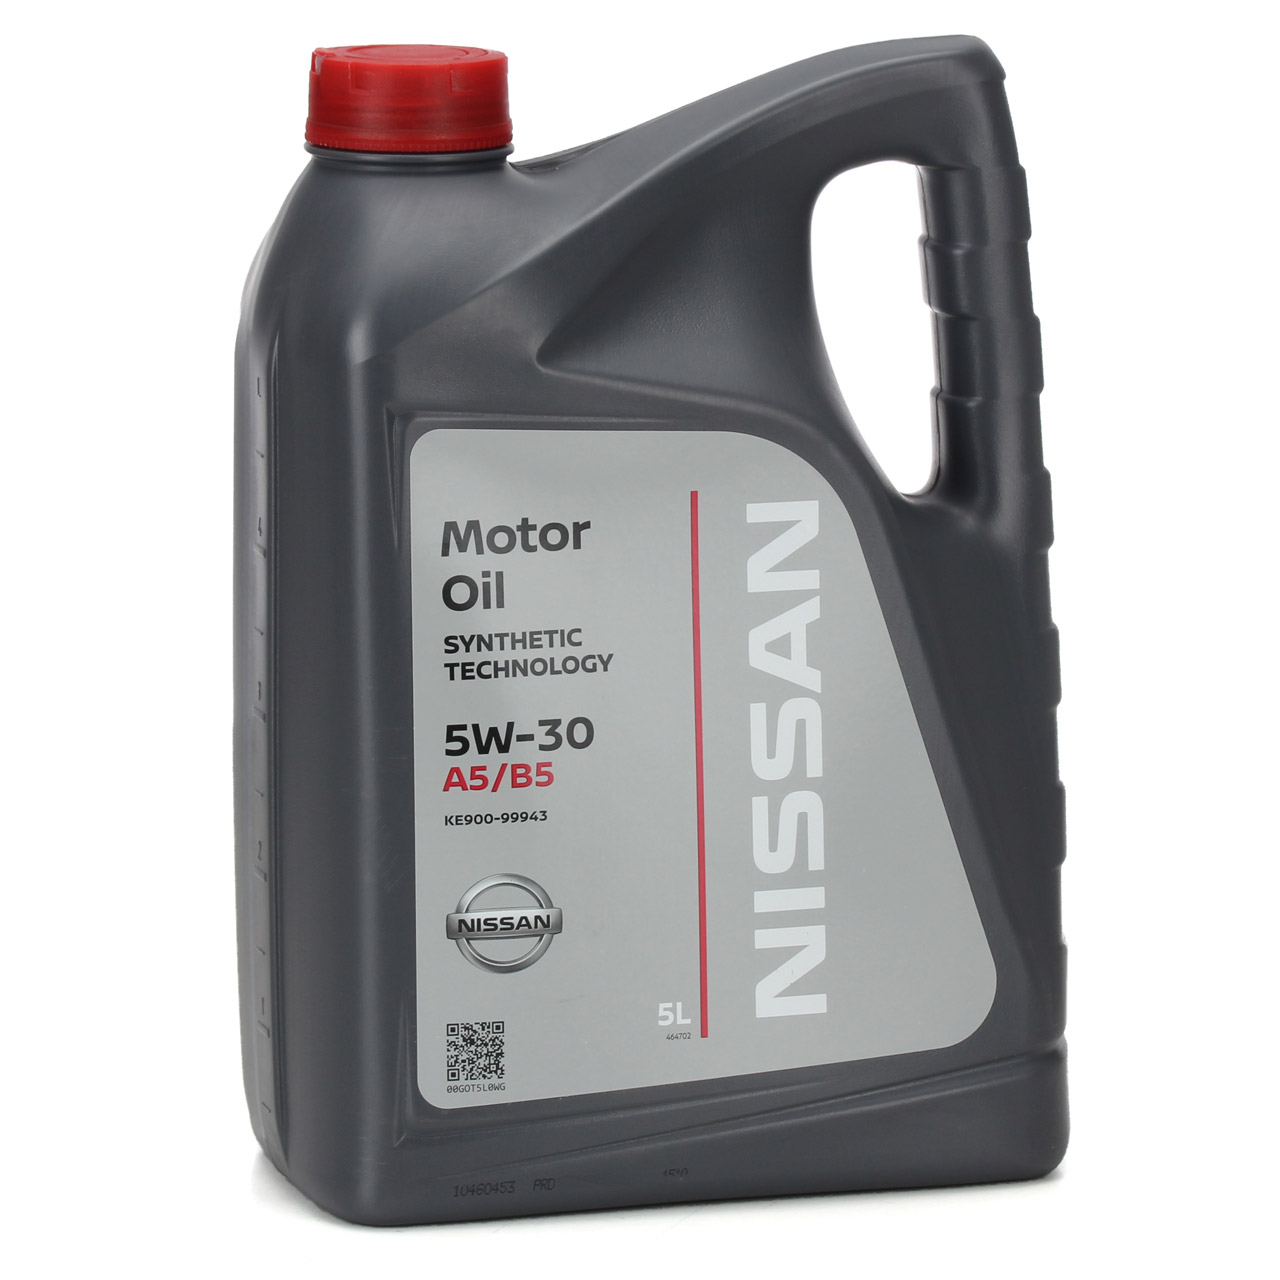 5L 5Liter ORIGINAL Nissan Motoröl Öl 5W-30 5W30 ACEA A5/B5 API SL/CF KE900-99943